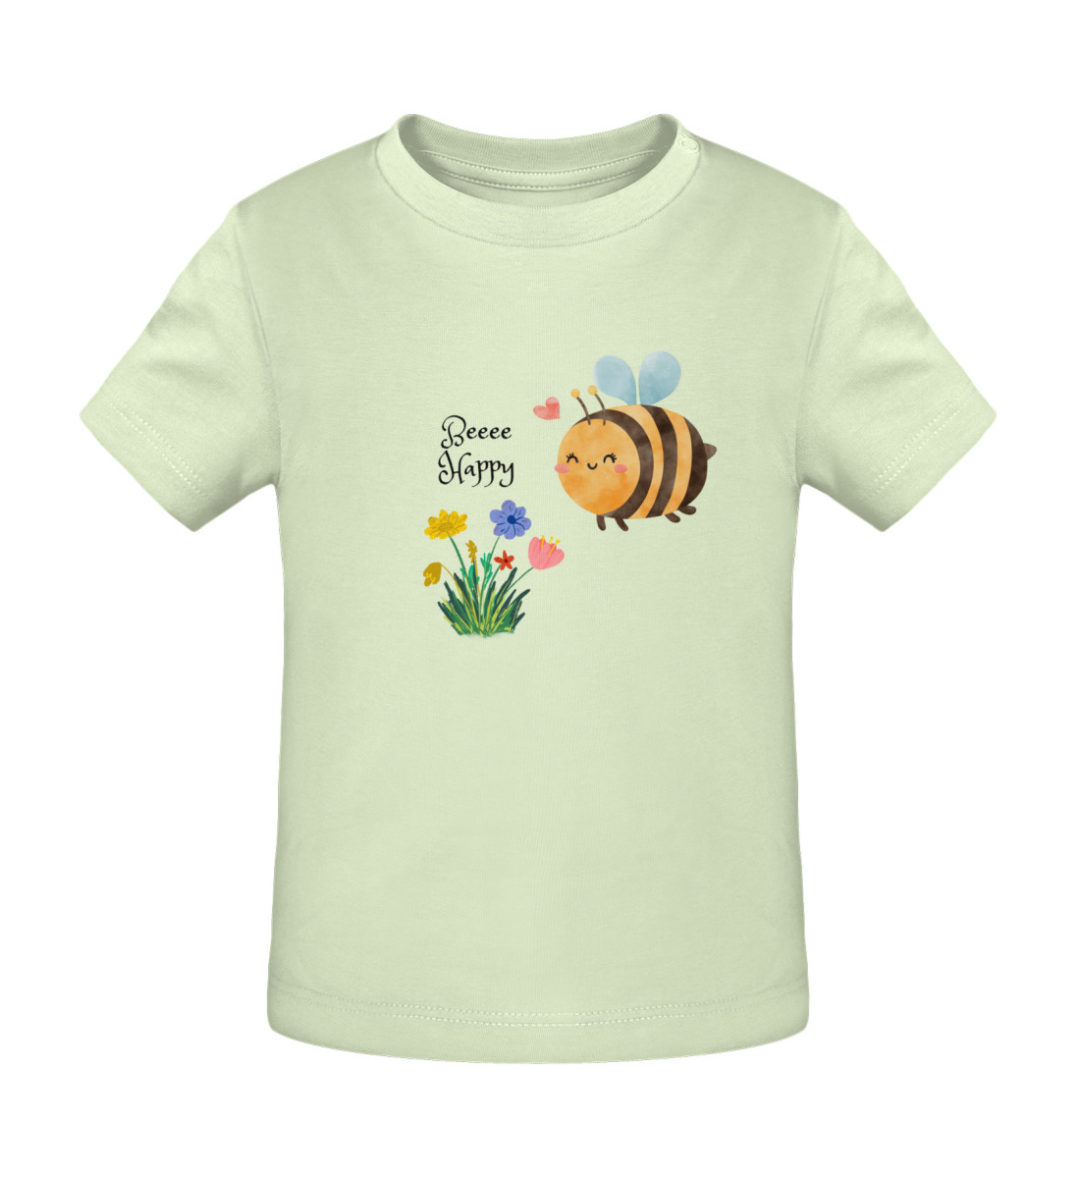 Beee happy - Baby Creator T-Shirt ST/ST-7105